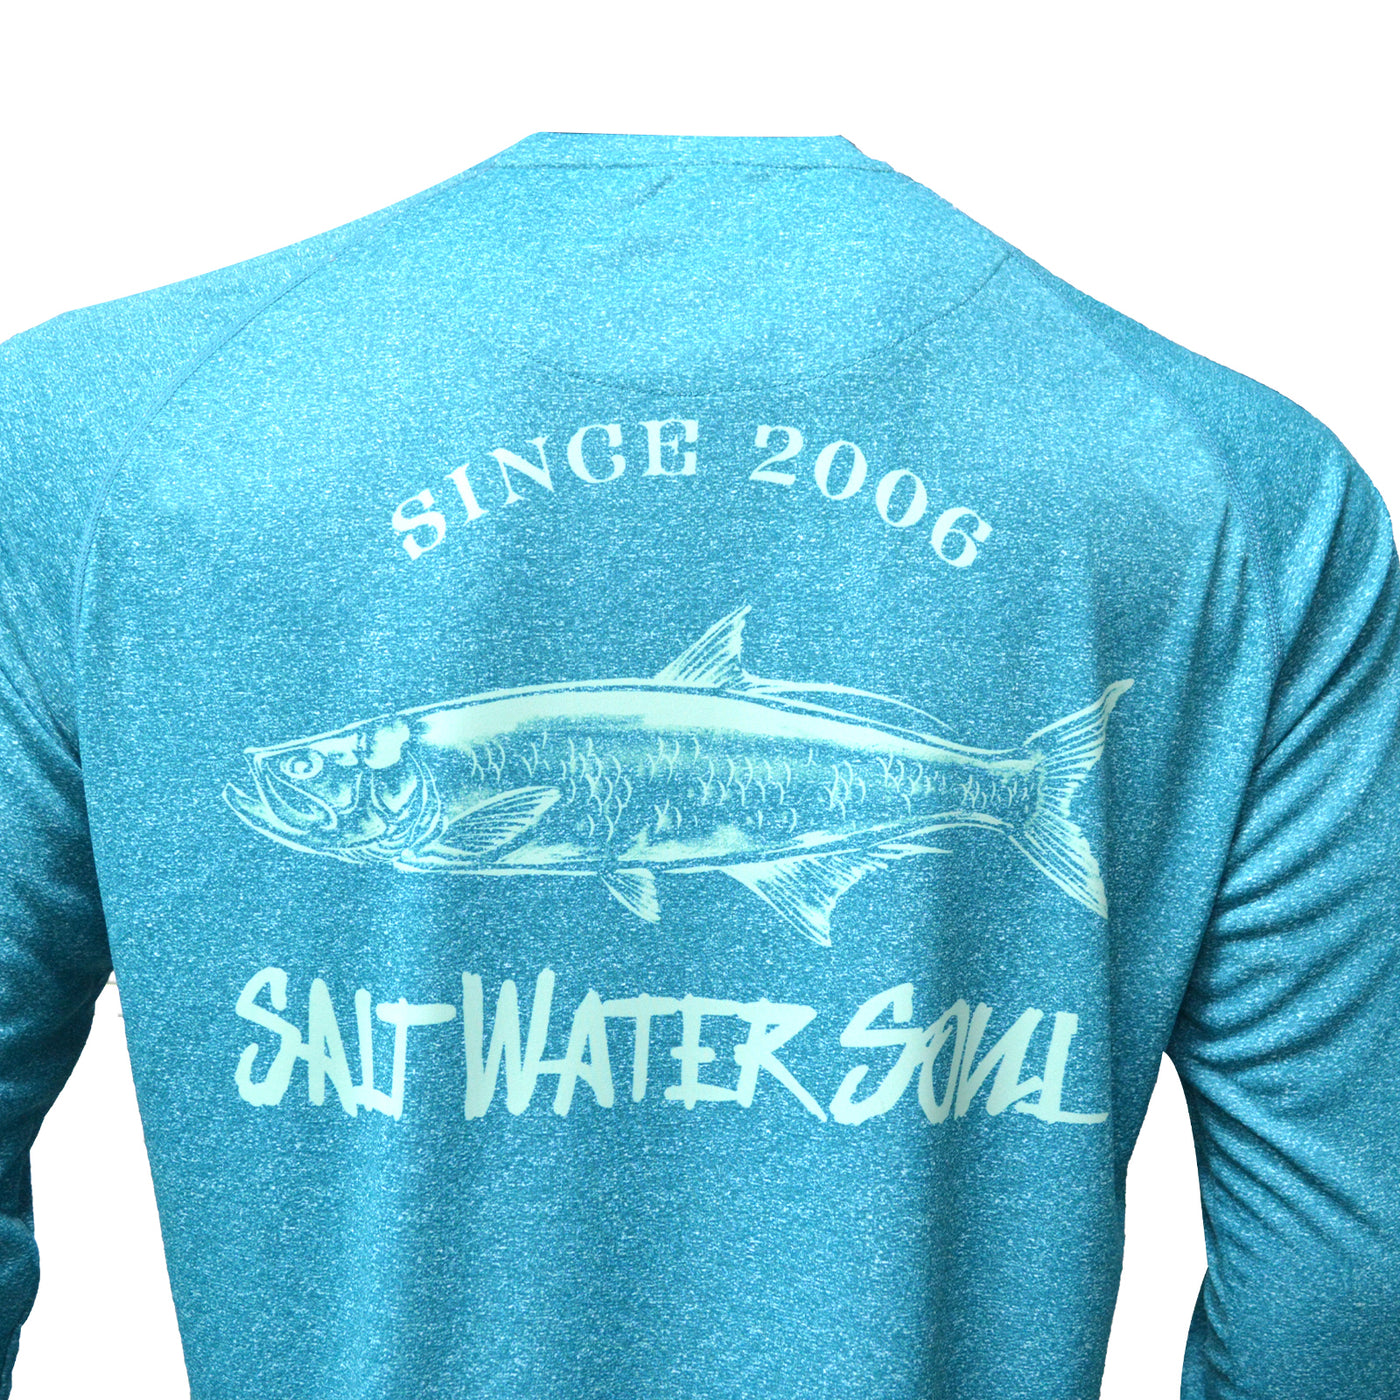 Buy Performance Fishing Shirts, Tarpon Fishing Shirts Design S / Blue